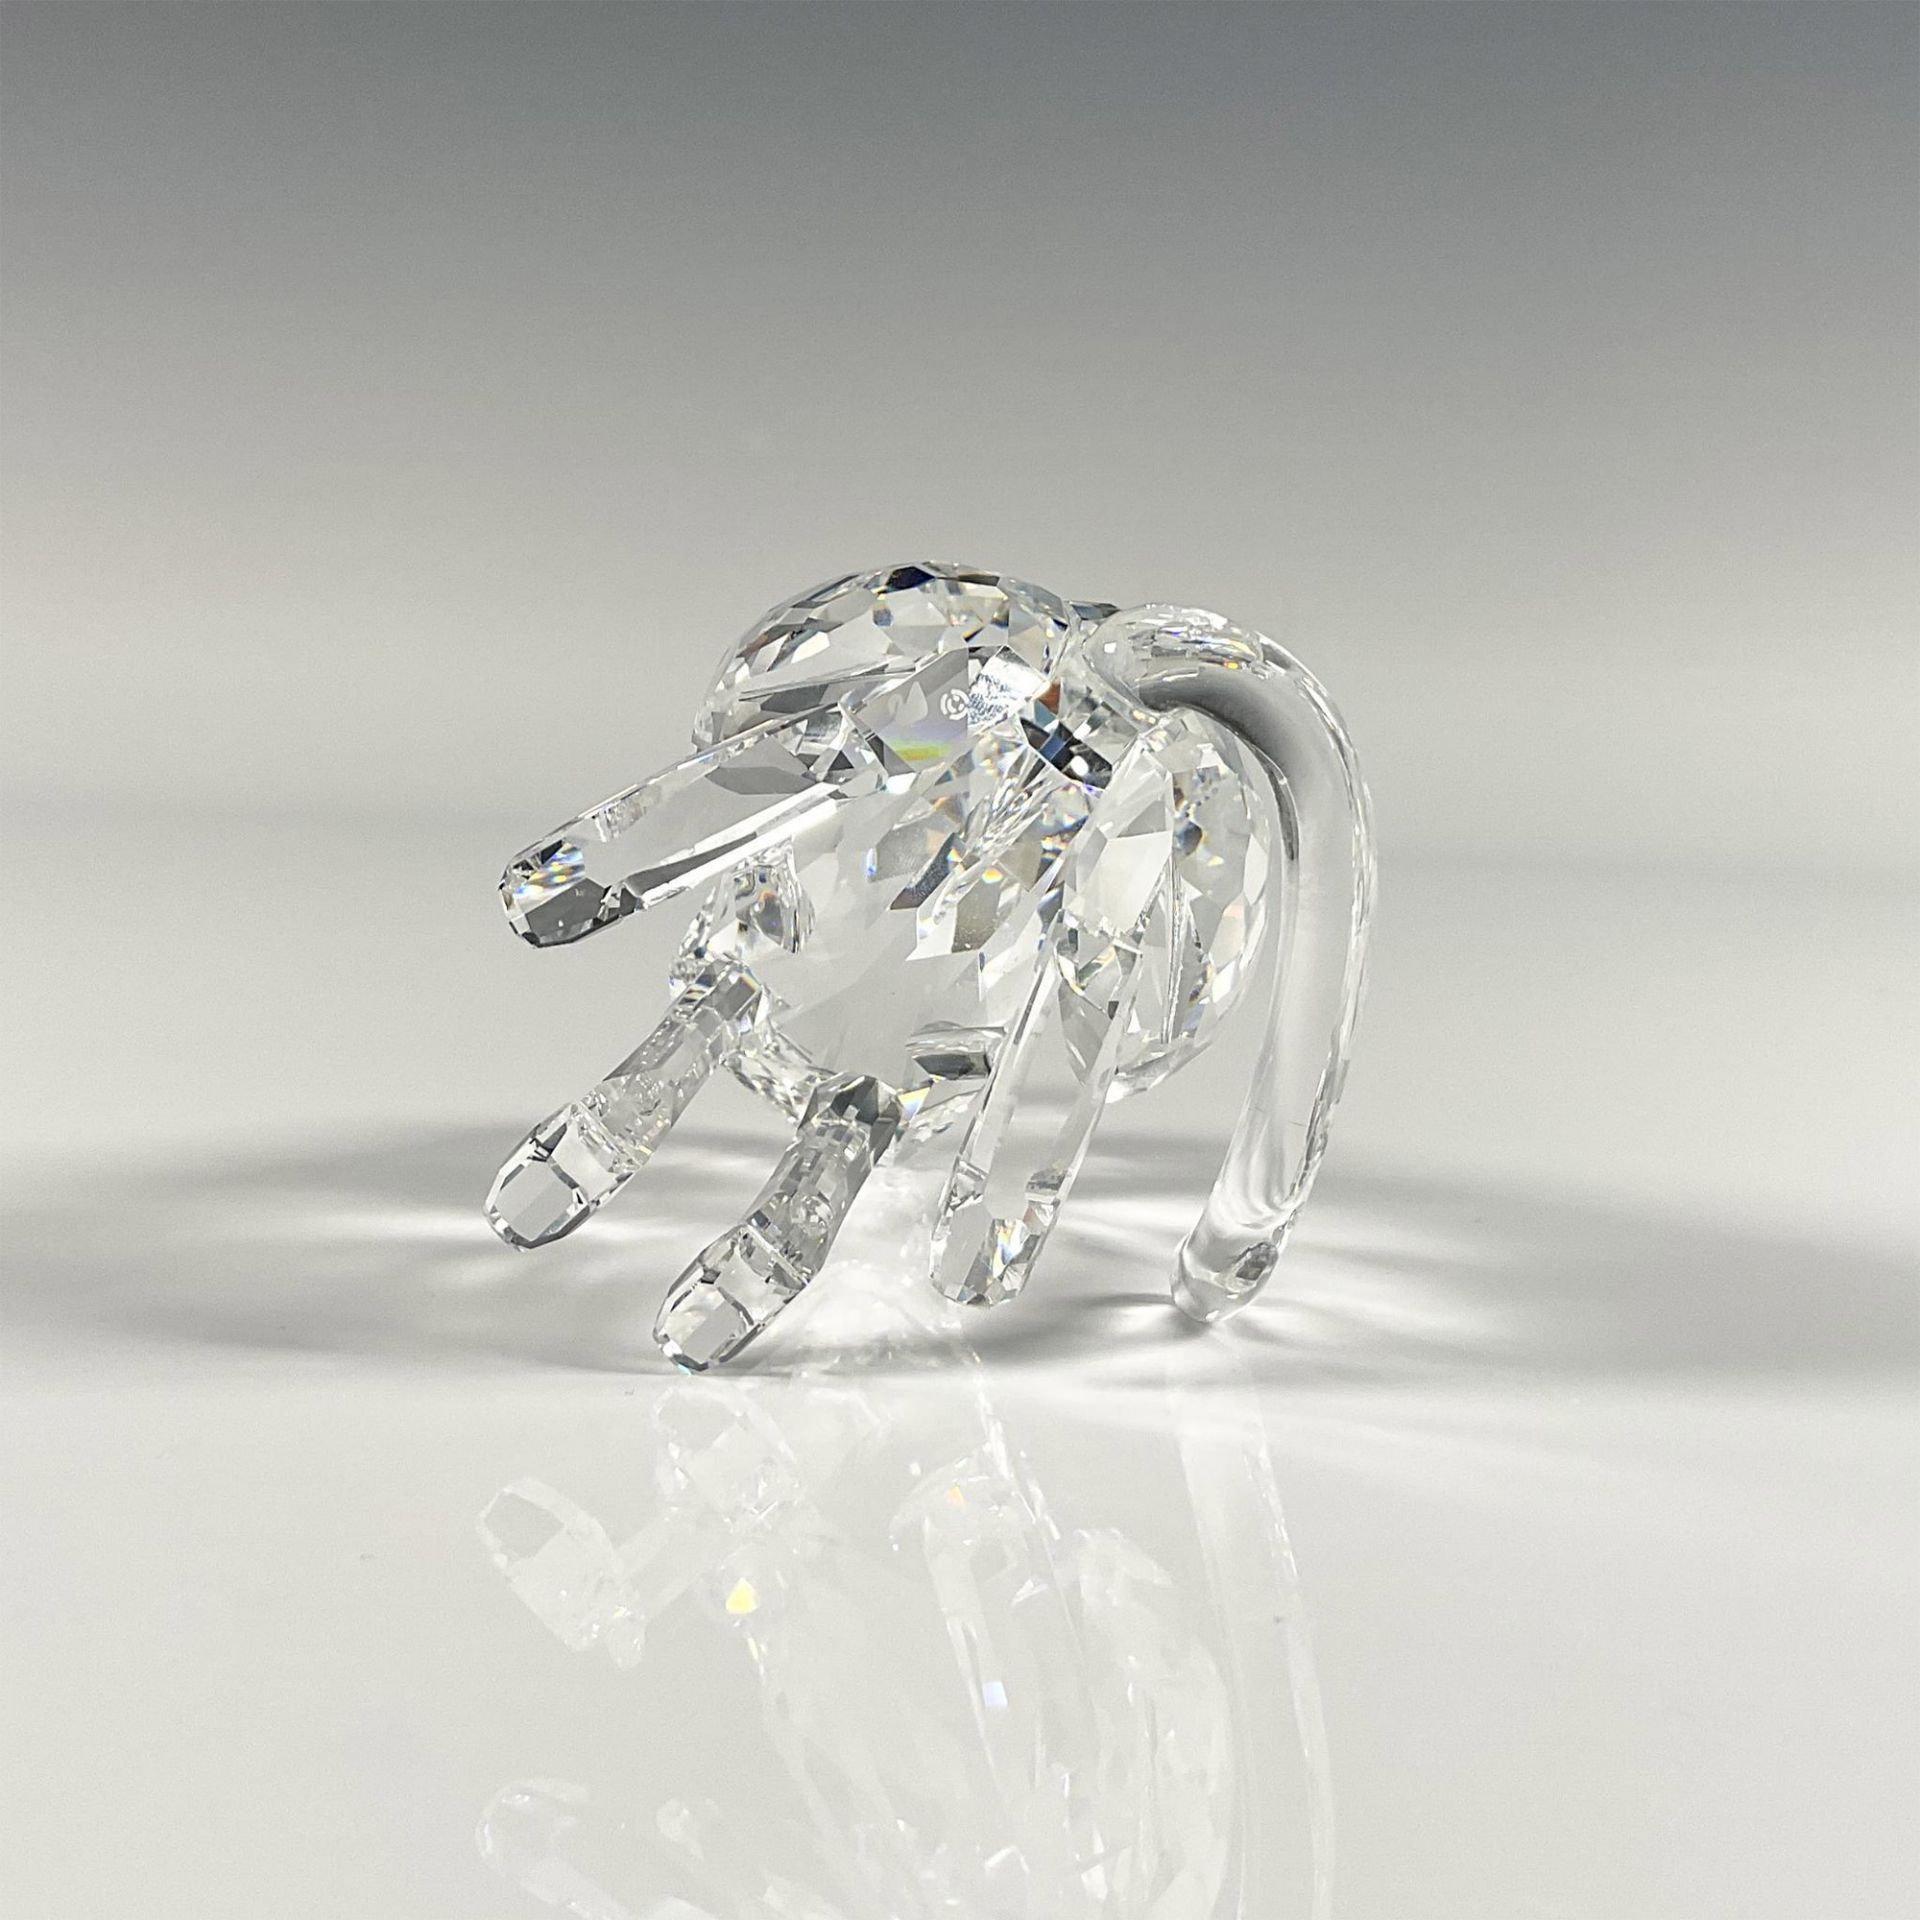 Swarovski Crystal Figurine, Cheetah - Image 3 of 3